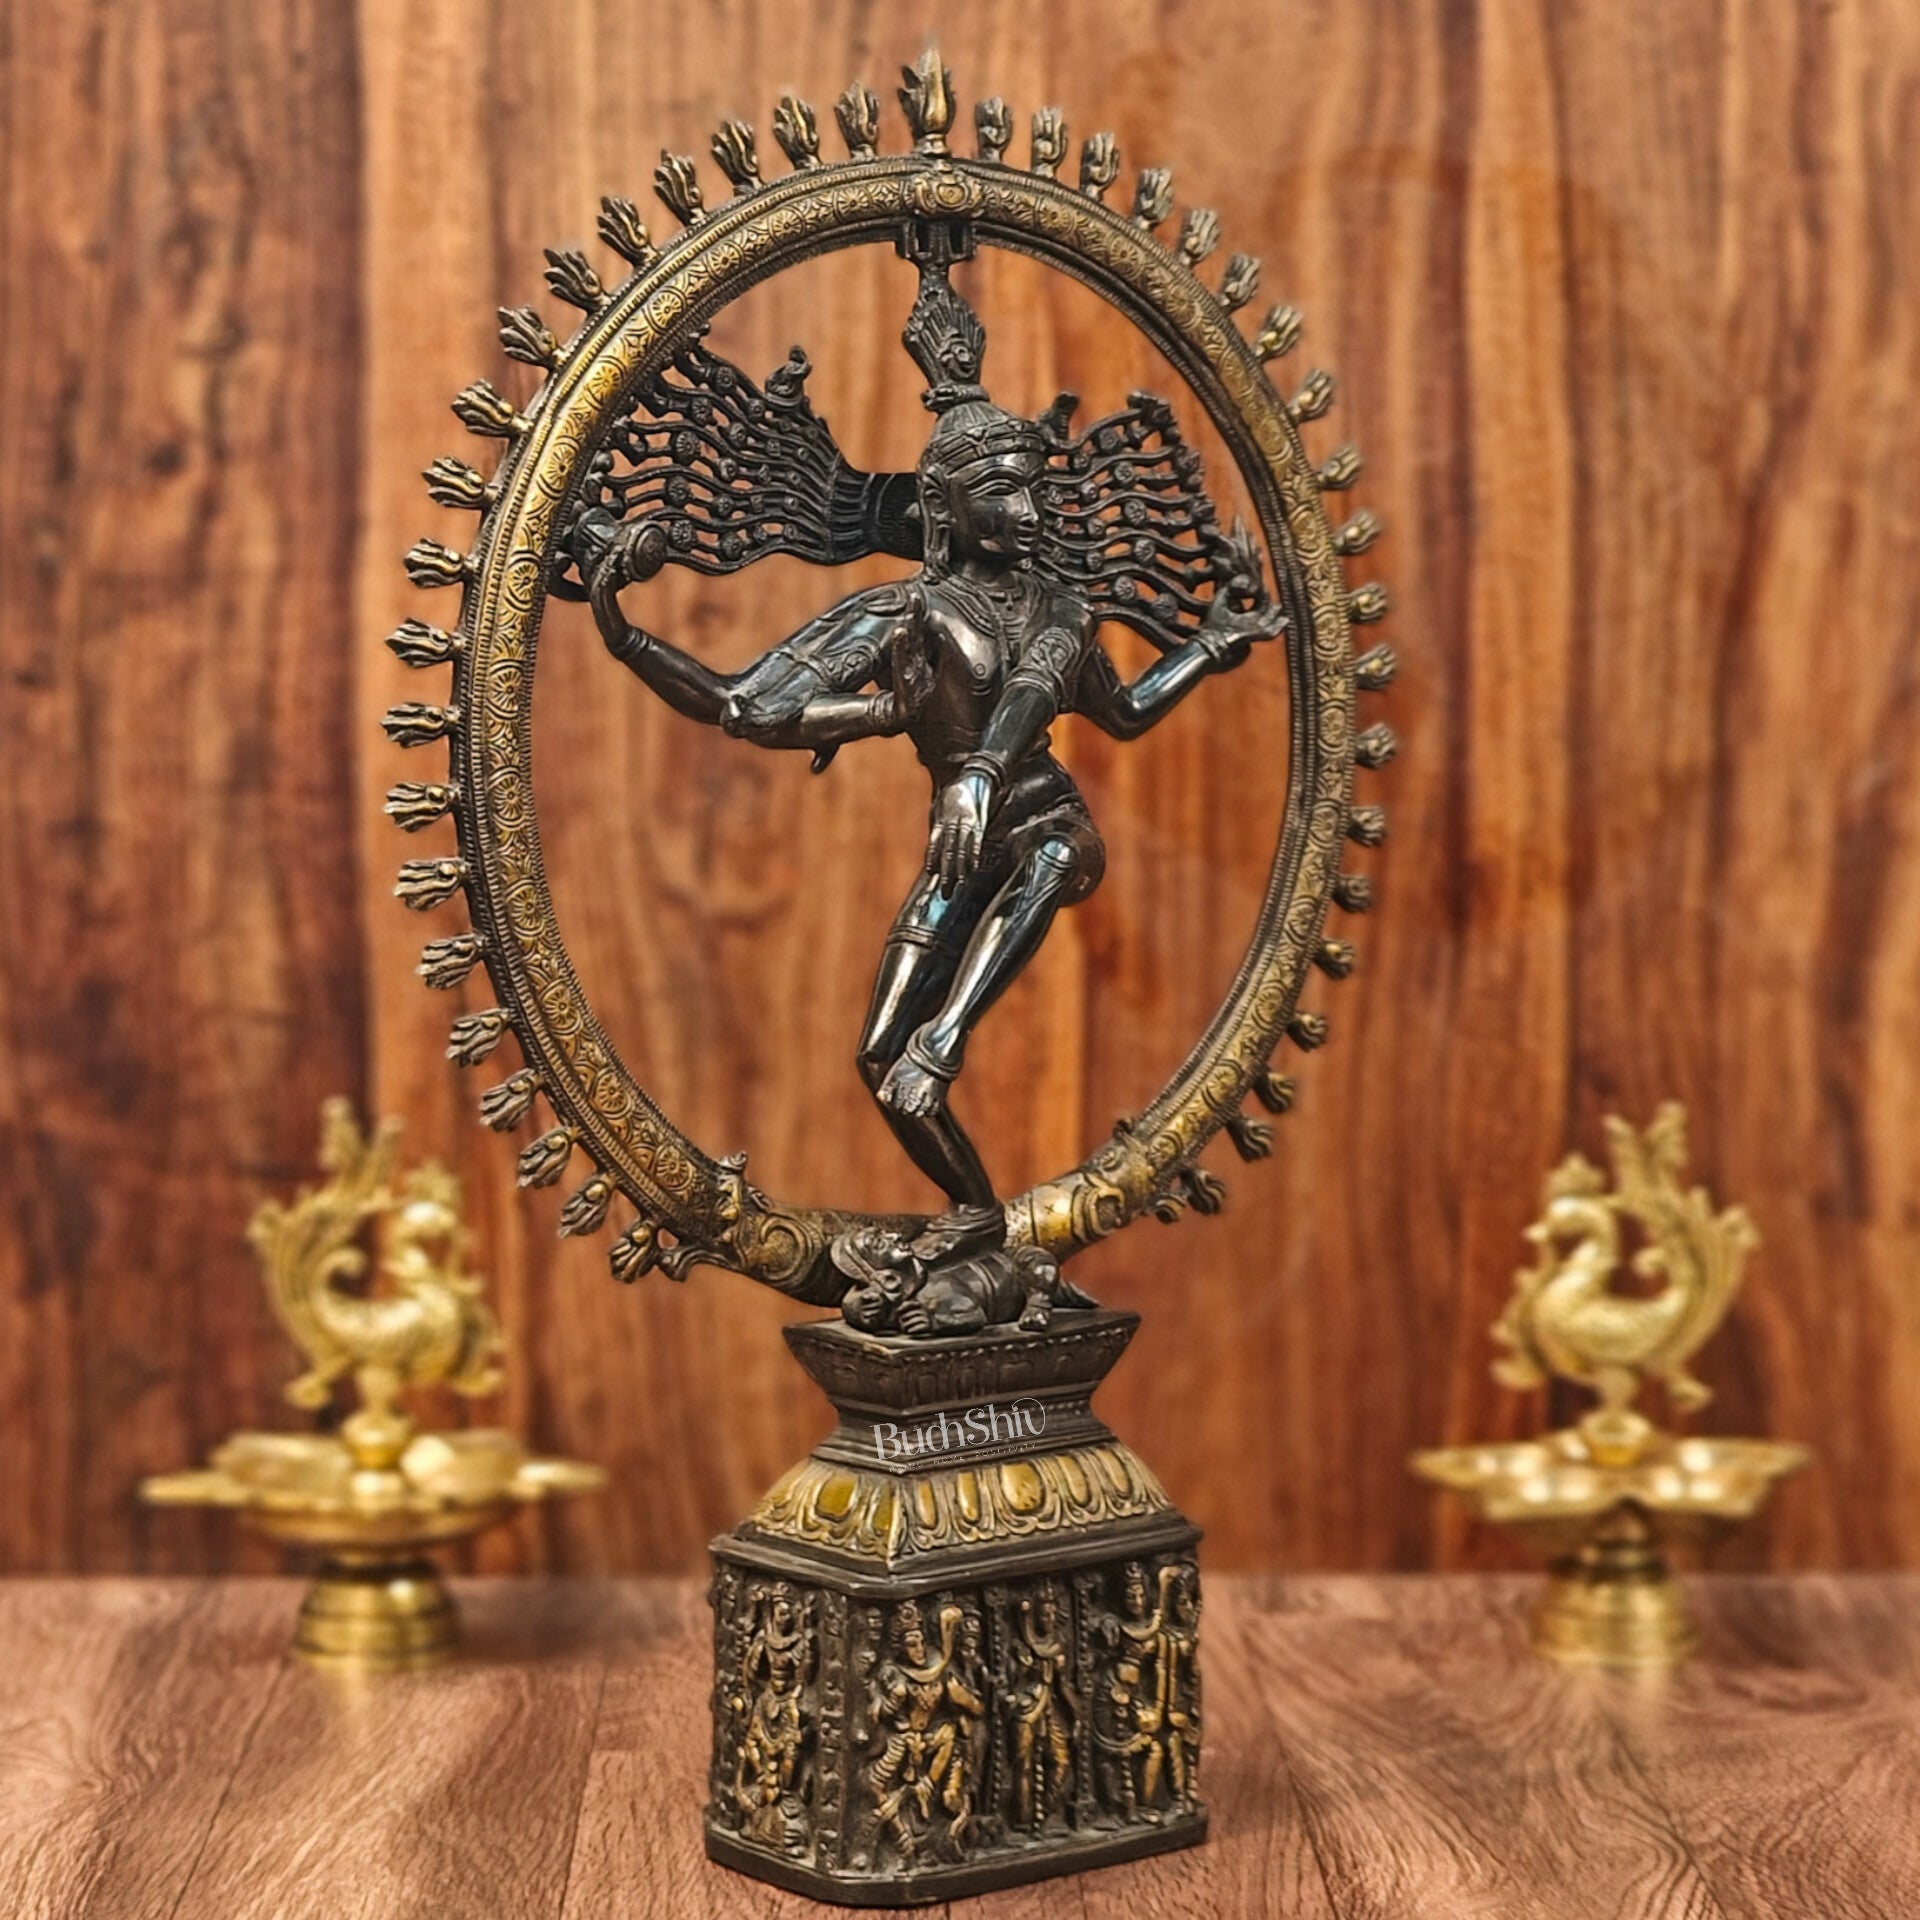 Shiva Brass Nataraj Statue - Dancing on Apasmara 23" - Black Gold - Budhshiv.com